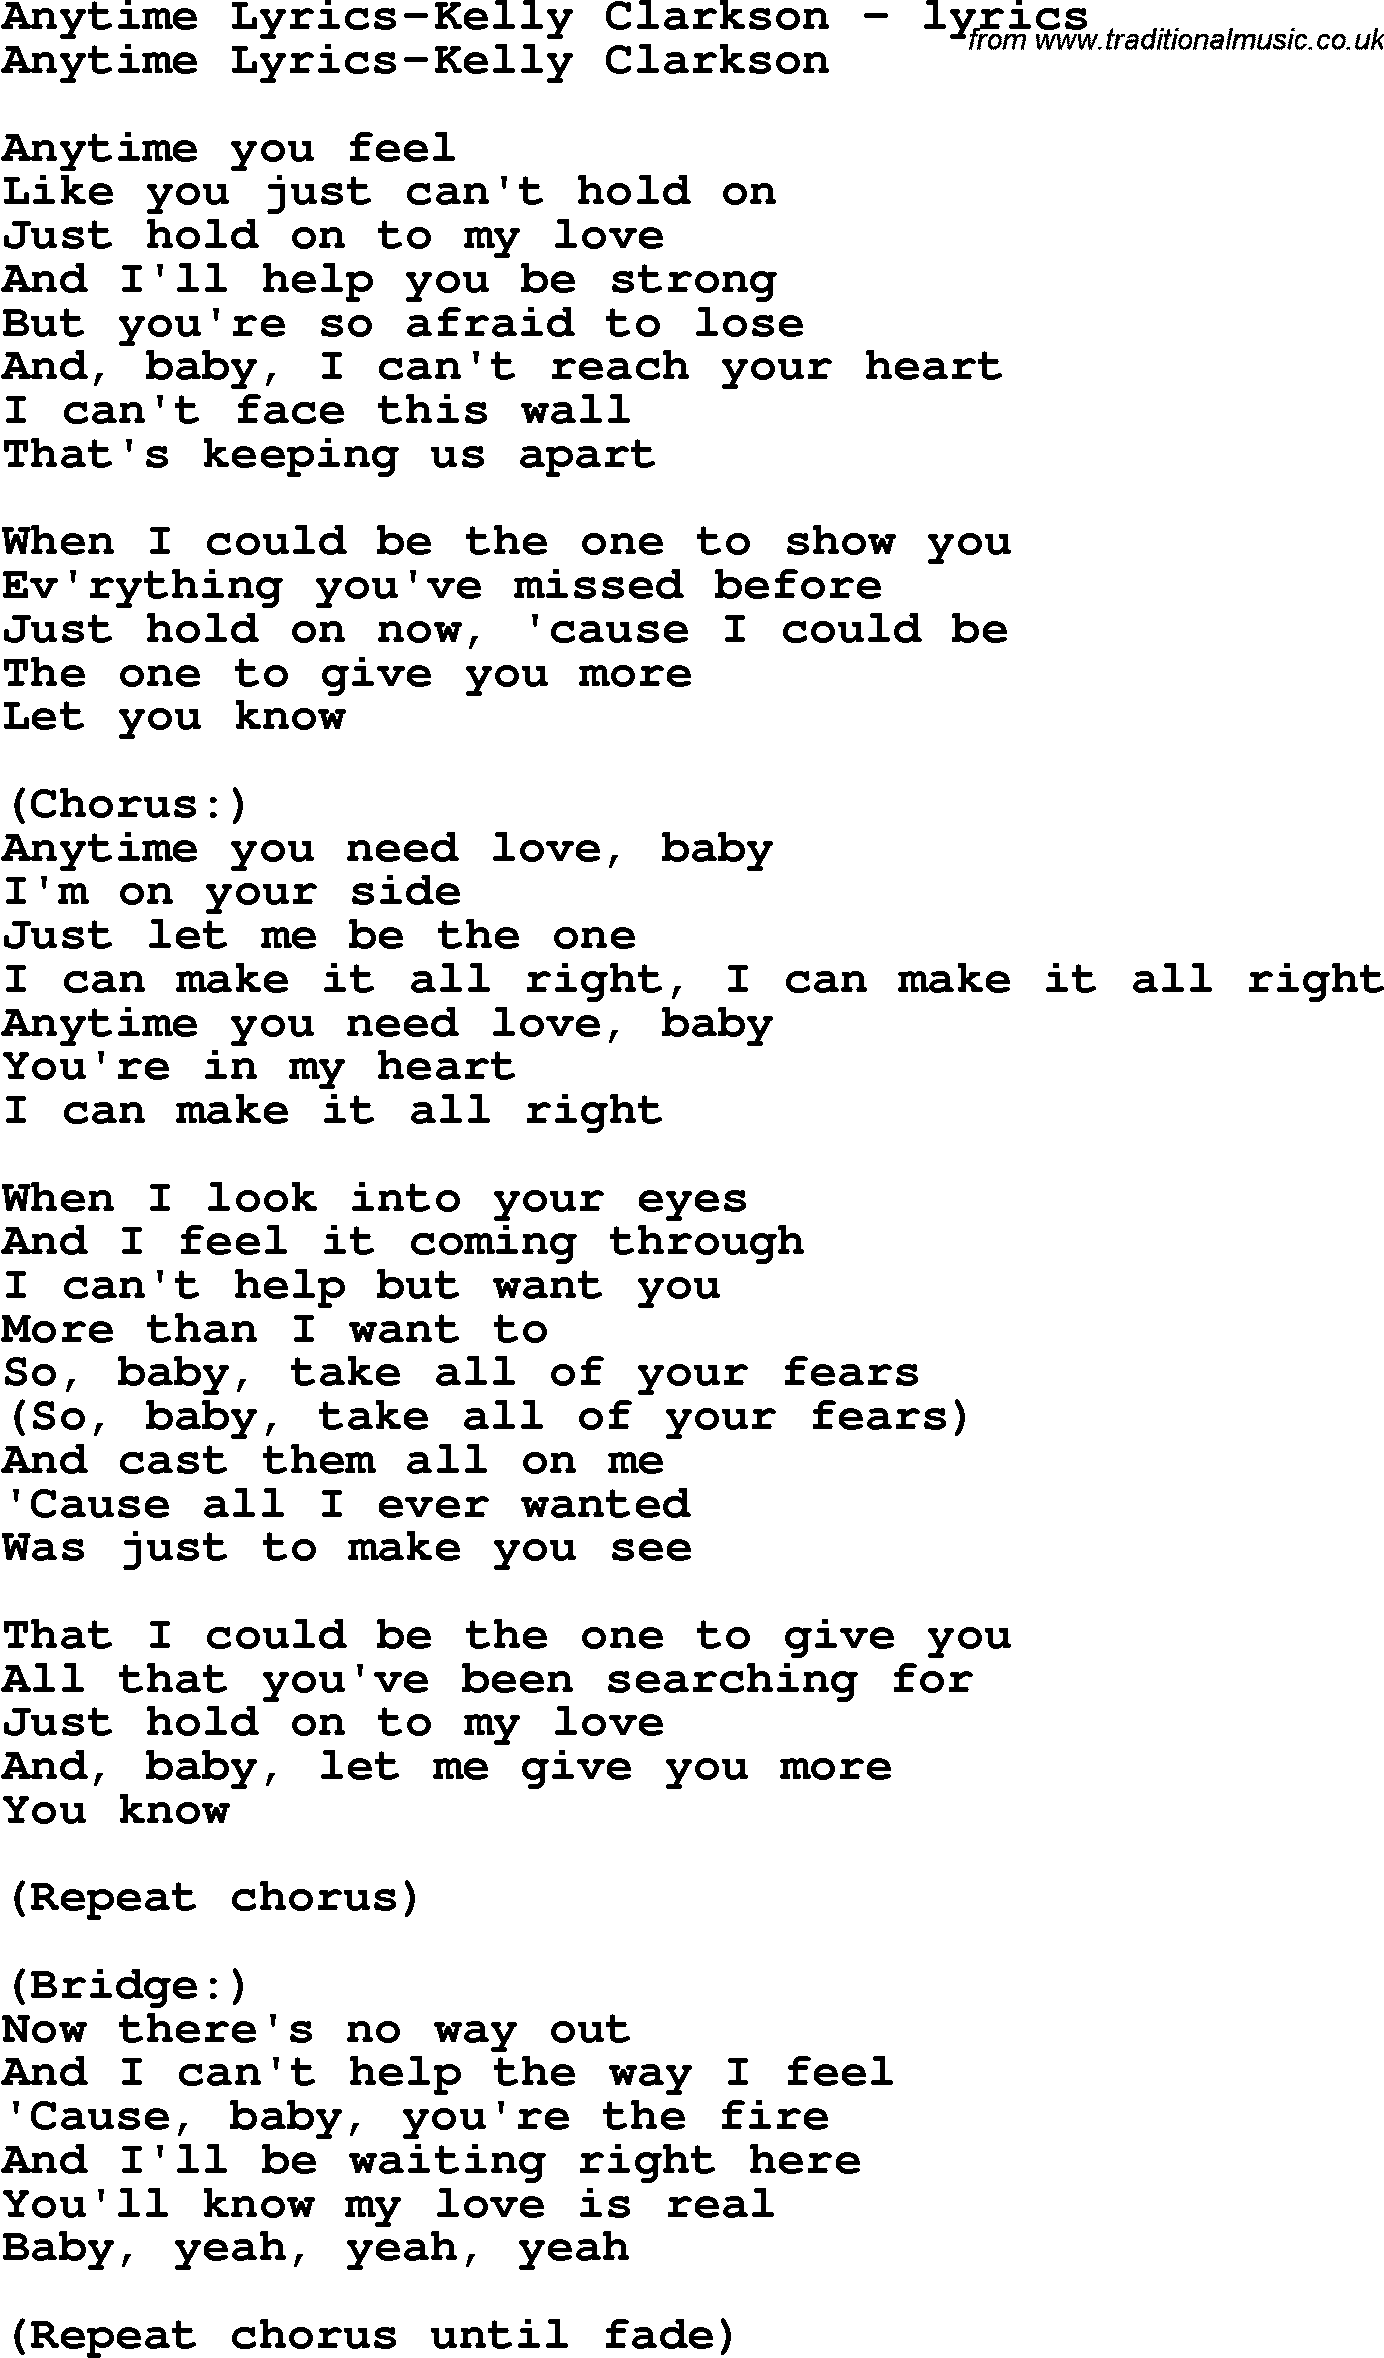 Love Song Lyrics for: Anytime Lyrics-Kelly Clarkson